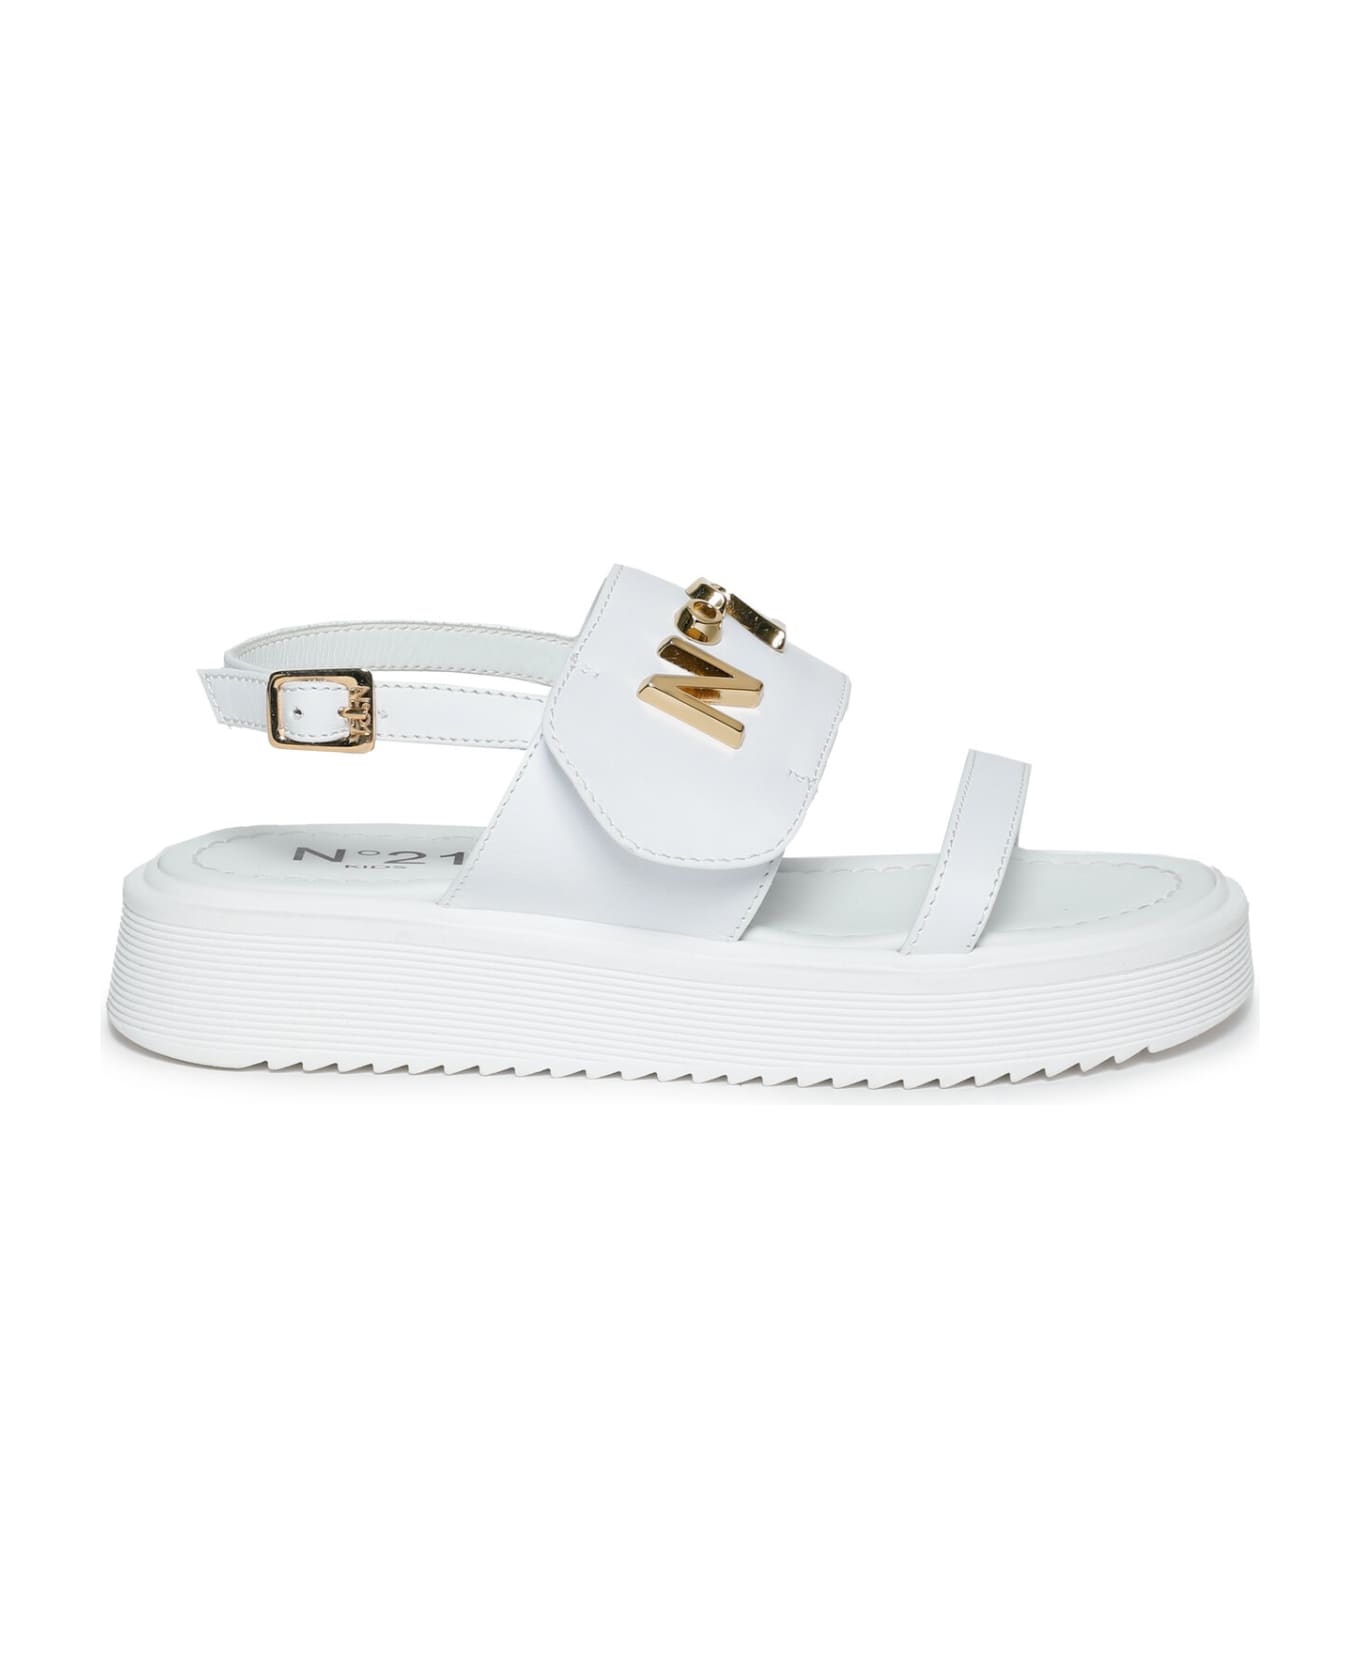 N.21 Mt73317 Sandals N°21 White Sandals With Metallic Logo - White